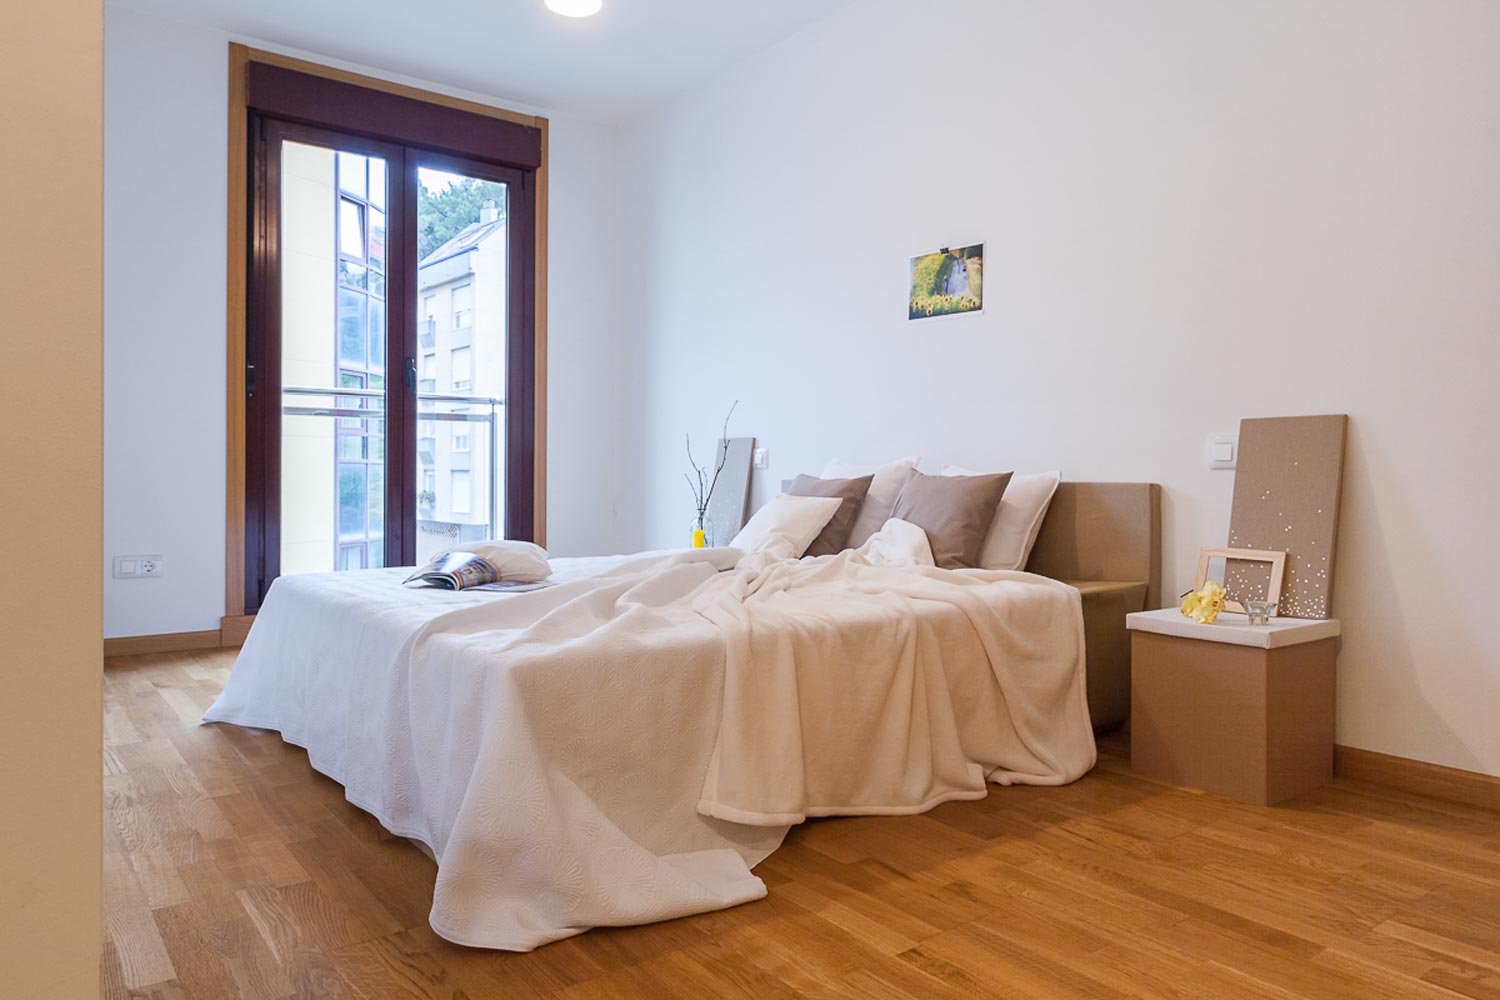 Dormitorio de matrimonio con balcón_ montaje de home staging con mobiliario de cartón y textiles neutros